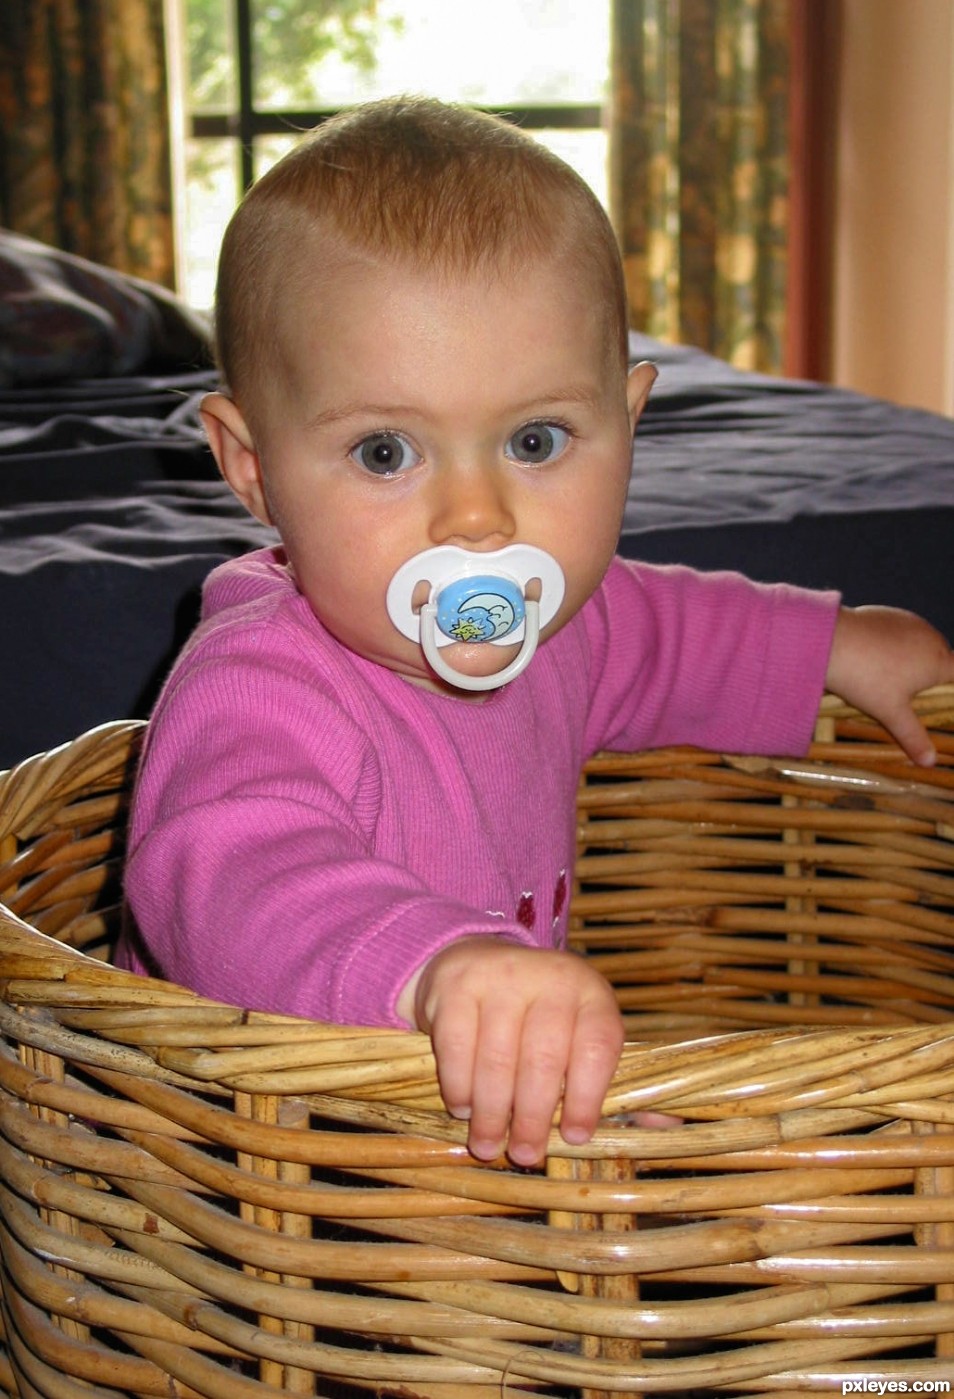 Gift basket or baby sitter